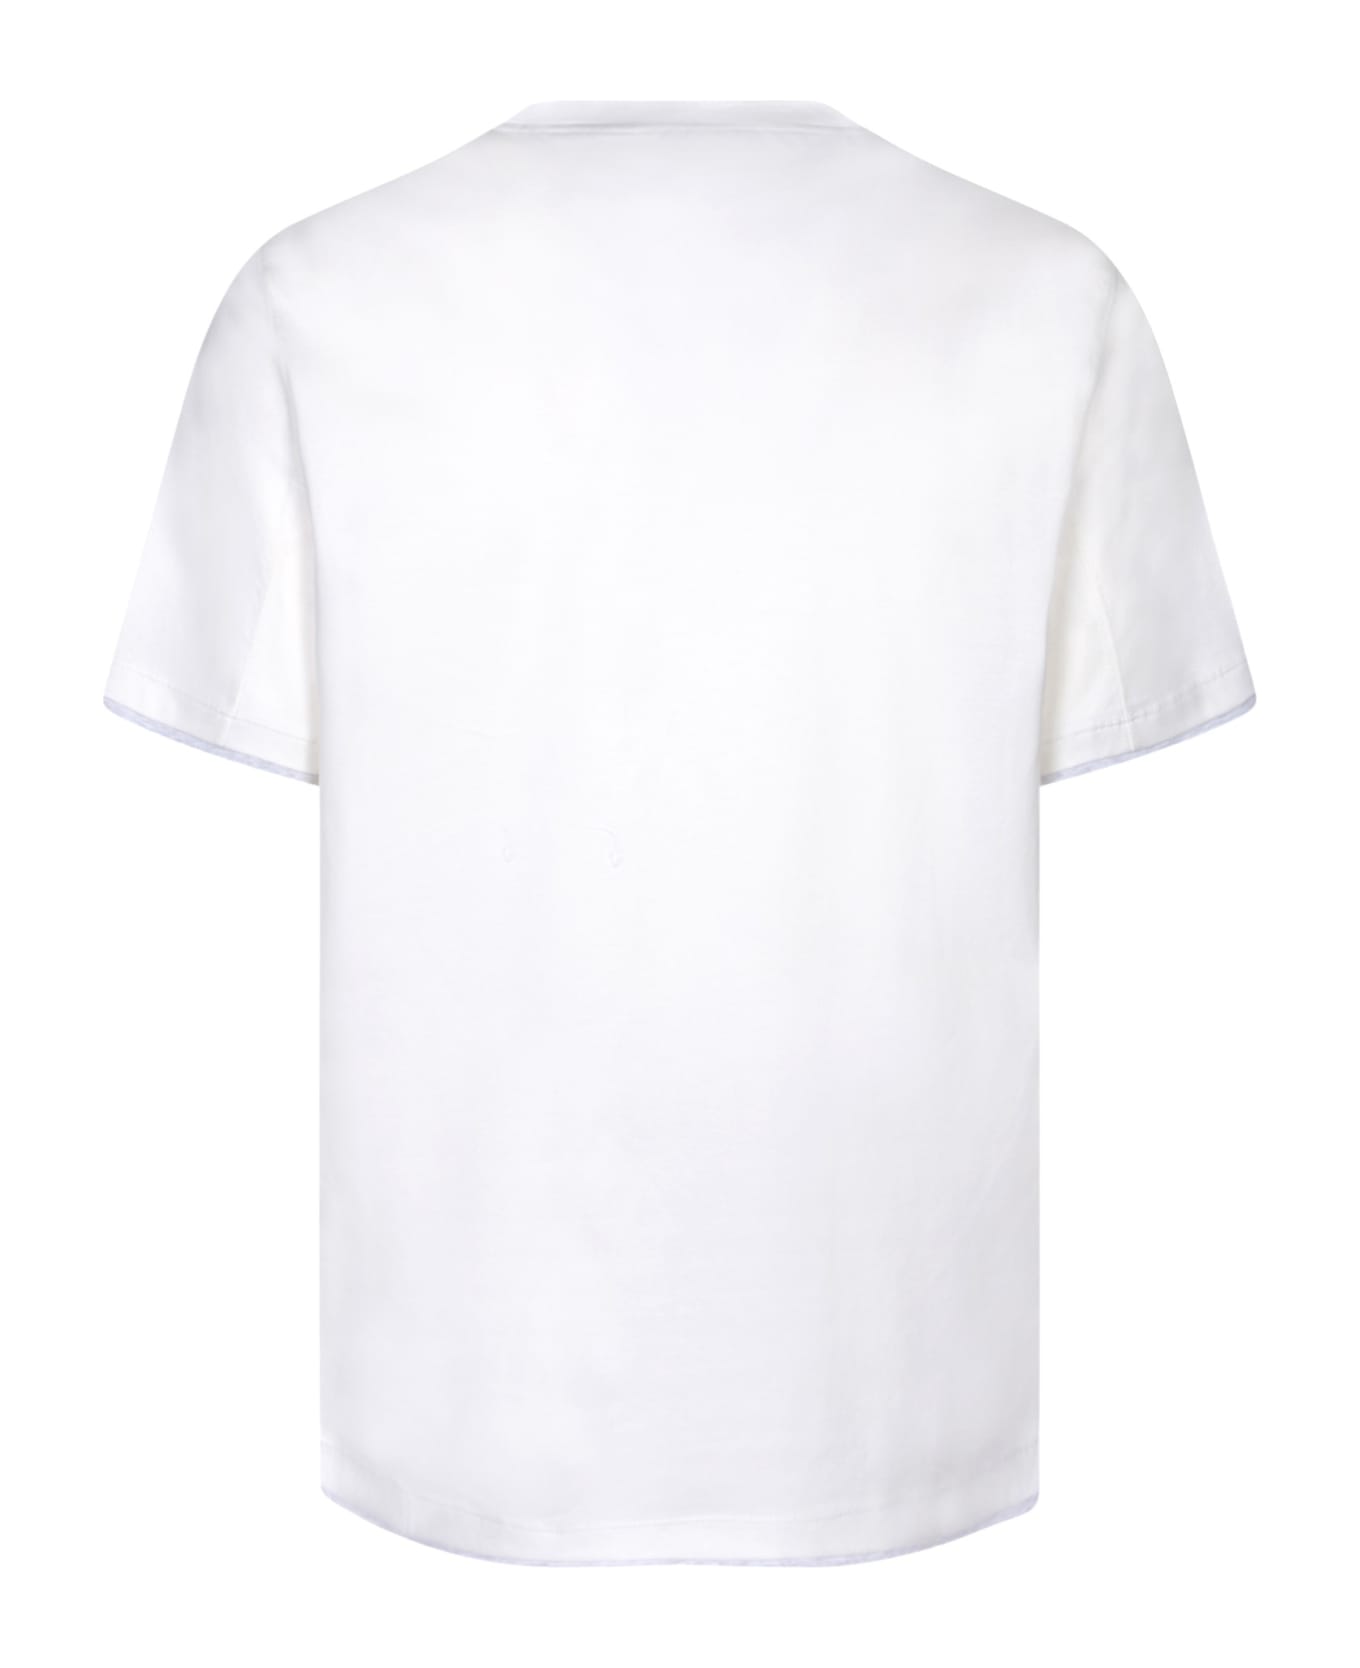 Brunello Cucinelli Contrasting Edges T-shirt - White シャツ